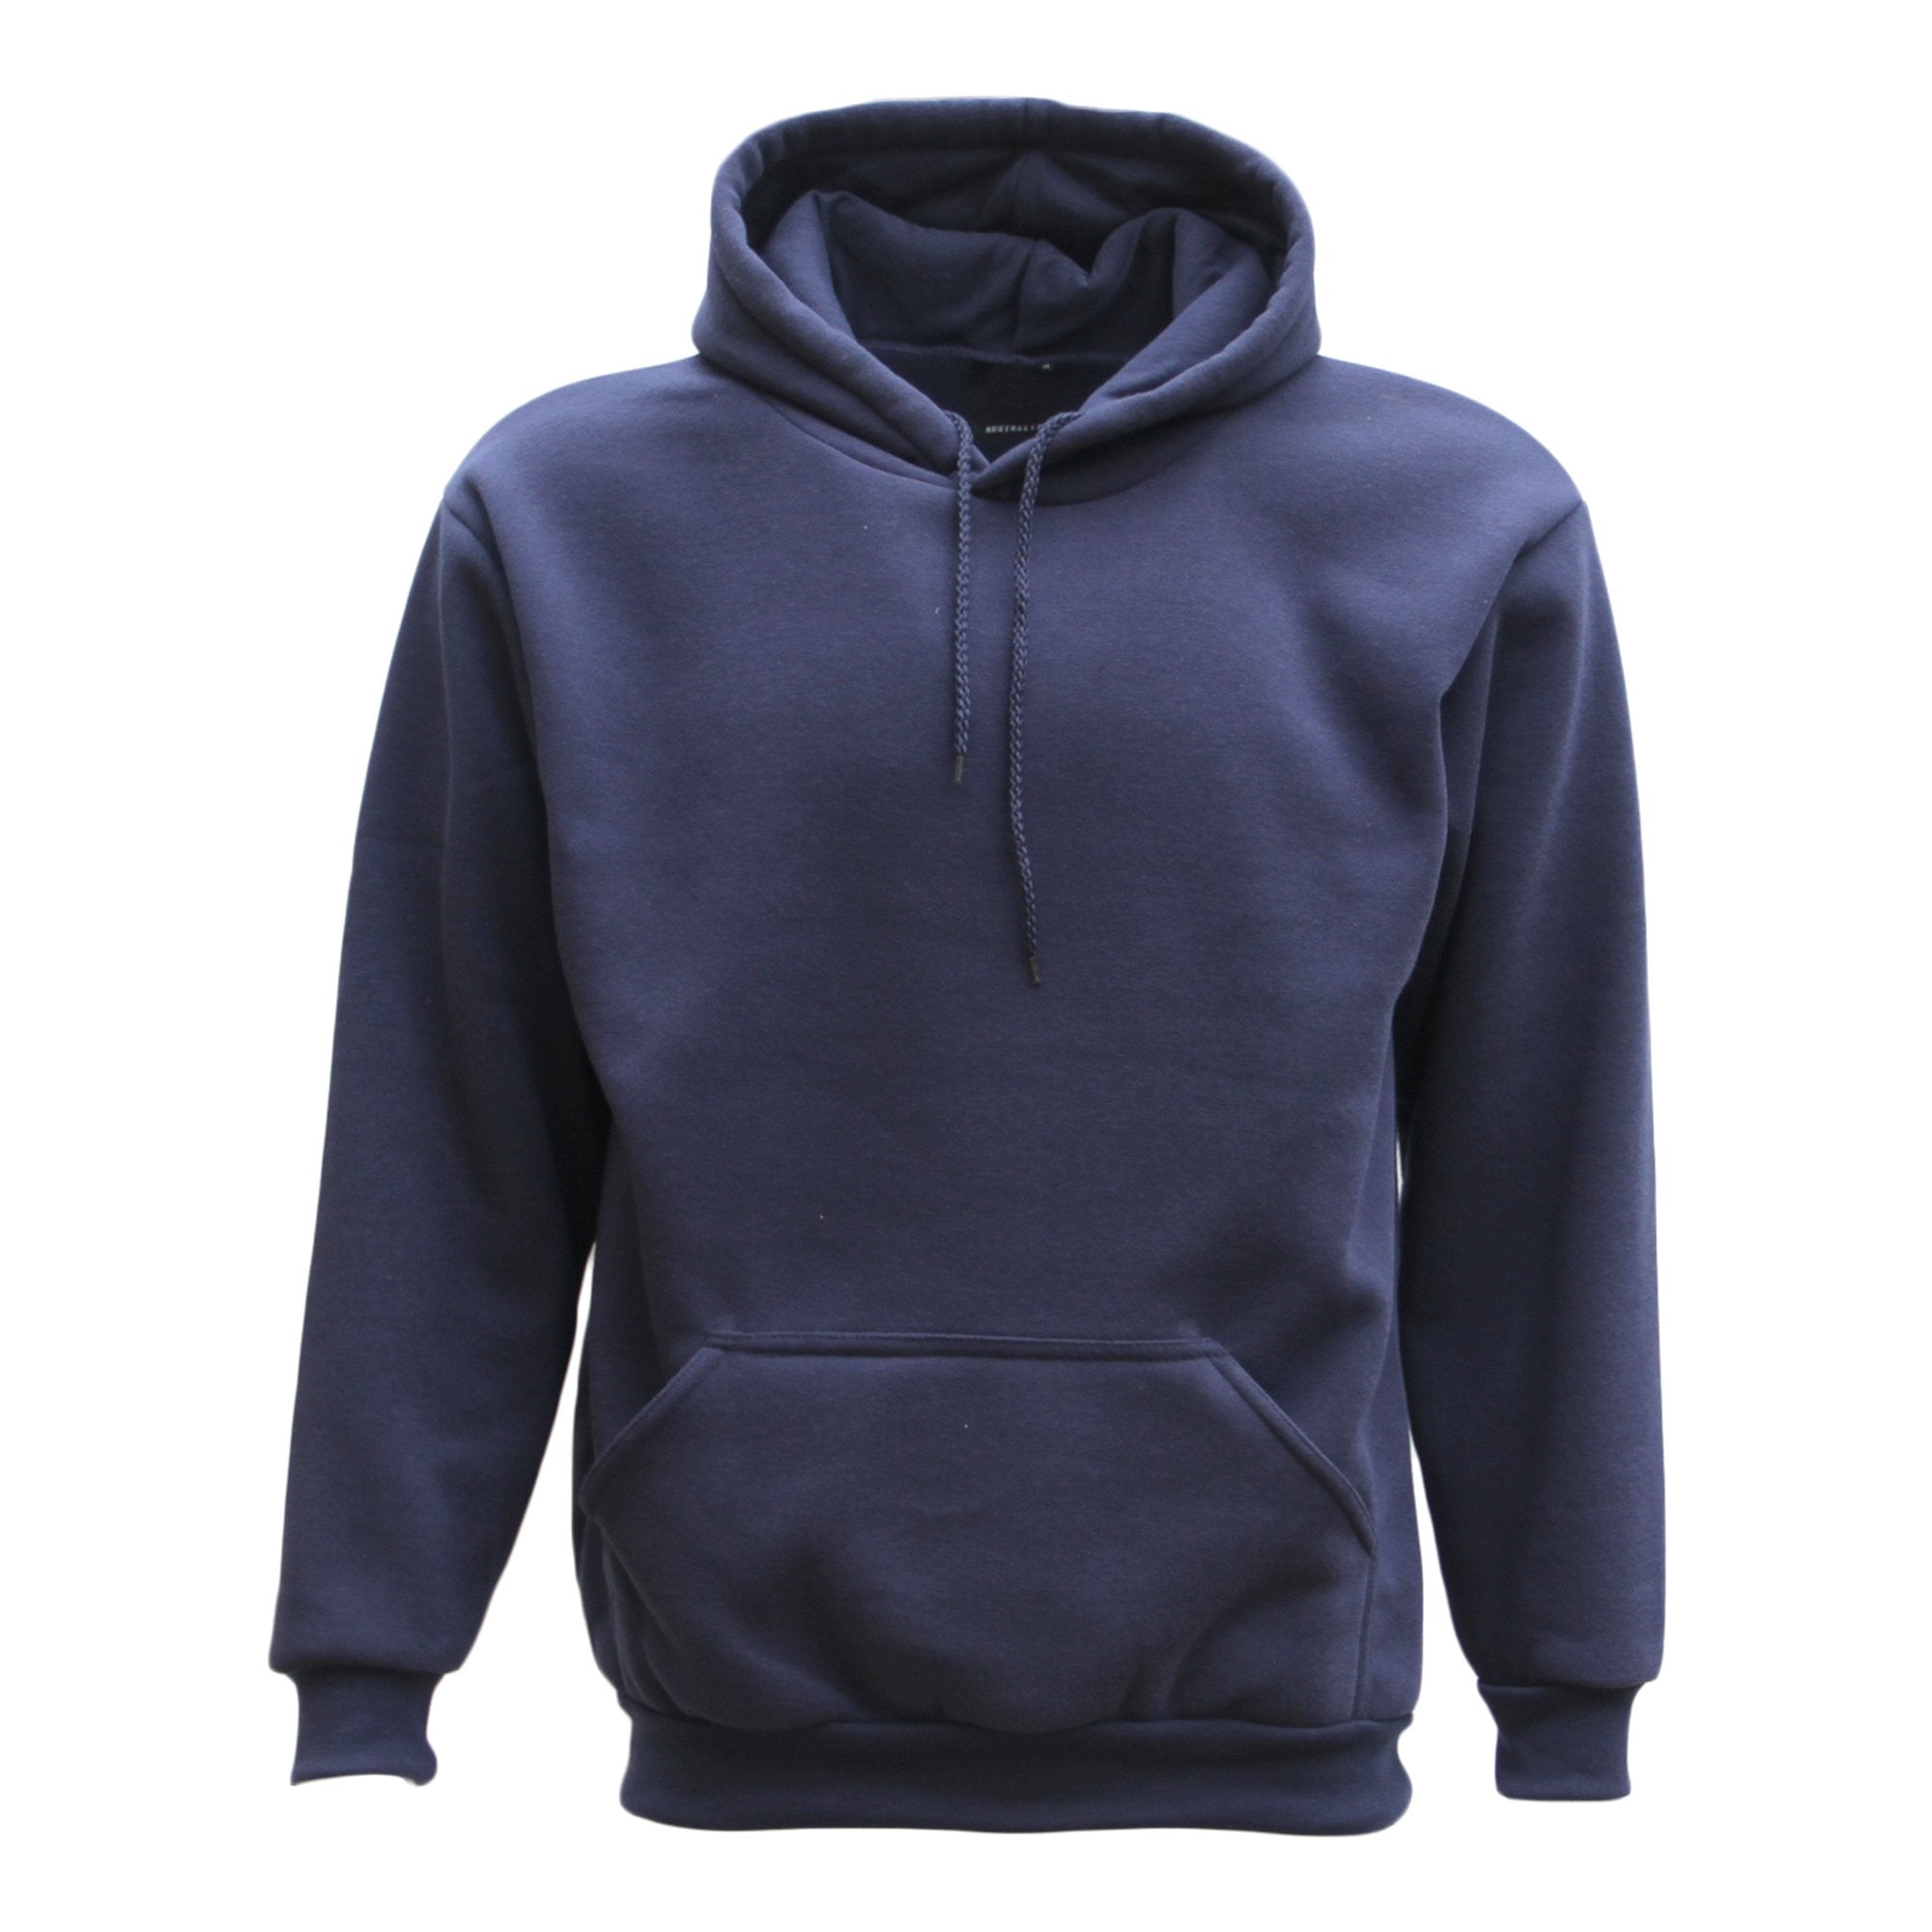 Adult Unisex Men'S Basic Plain Hoodie Pullover Sweater Sweatshirt Jumper Xs-8Xl, Navy, 3Xl